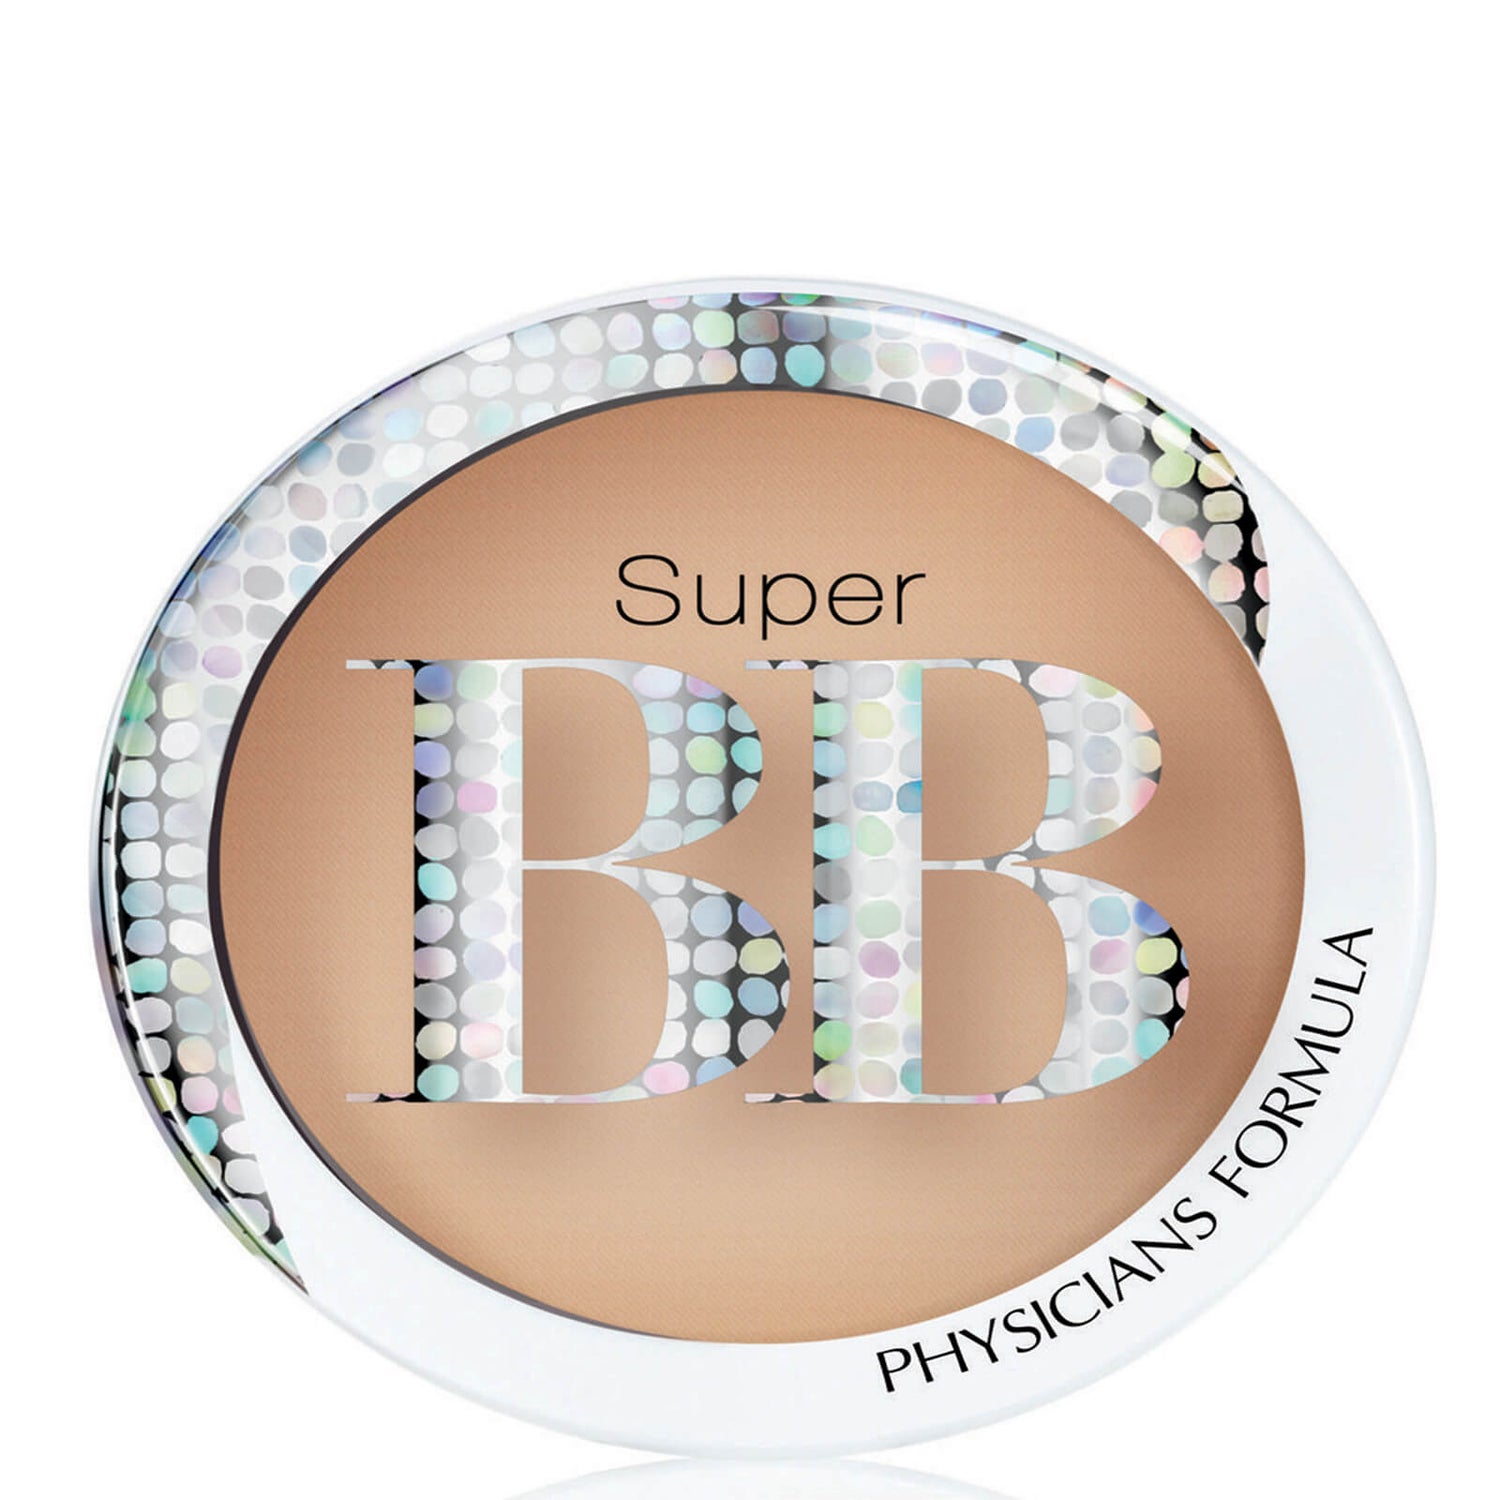 Physicians Formula Super BB Beauty Balm Powder Light/Medium